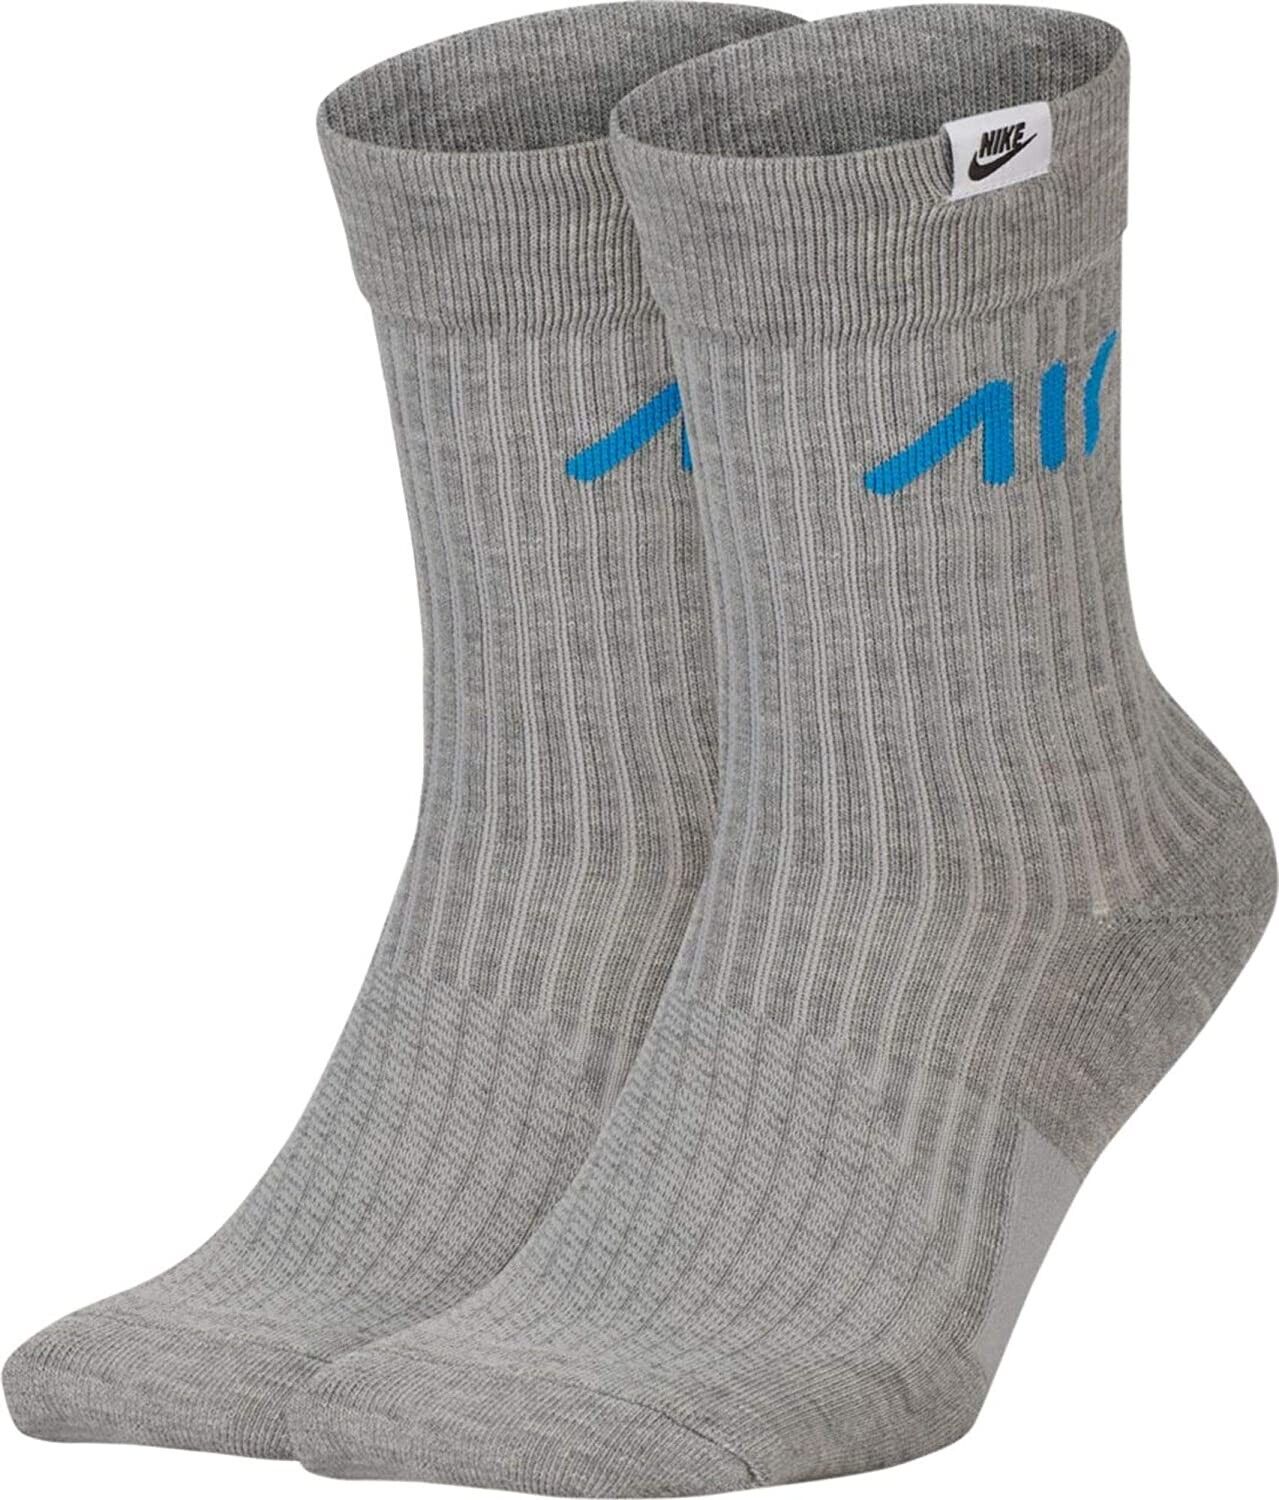 NIKE Sneaker Sox Essentials 2-Pack Crew Socks Medium (6-8) Gray Air Max SNKR | eBay